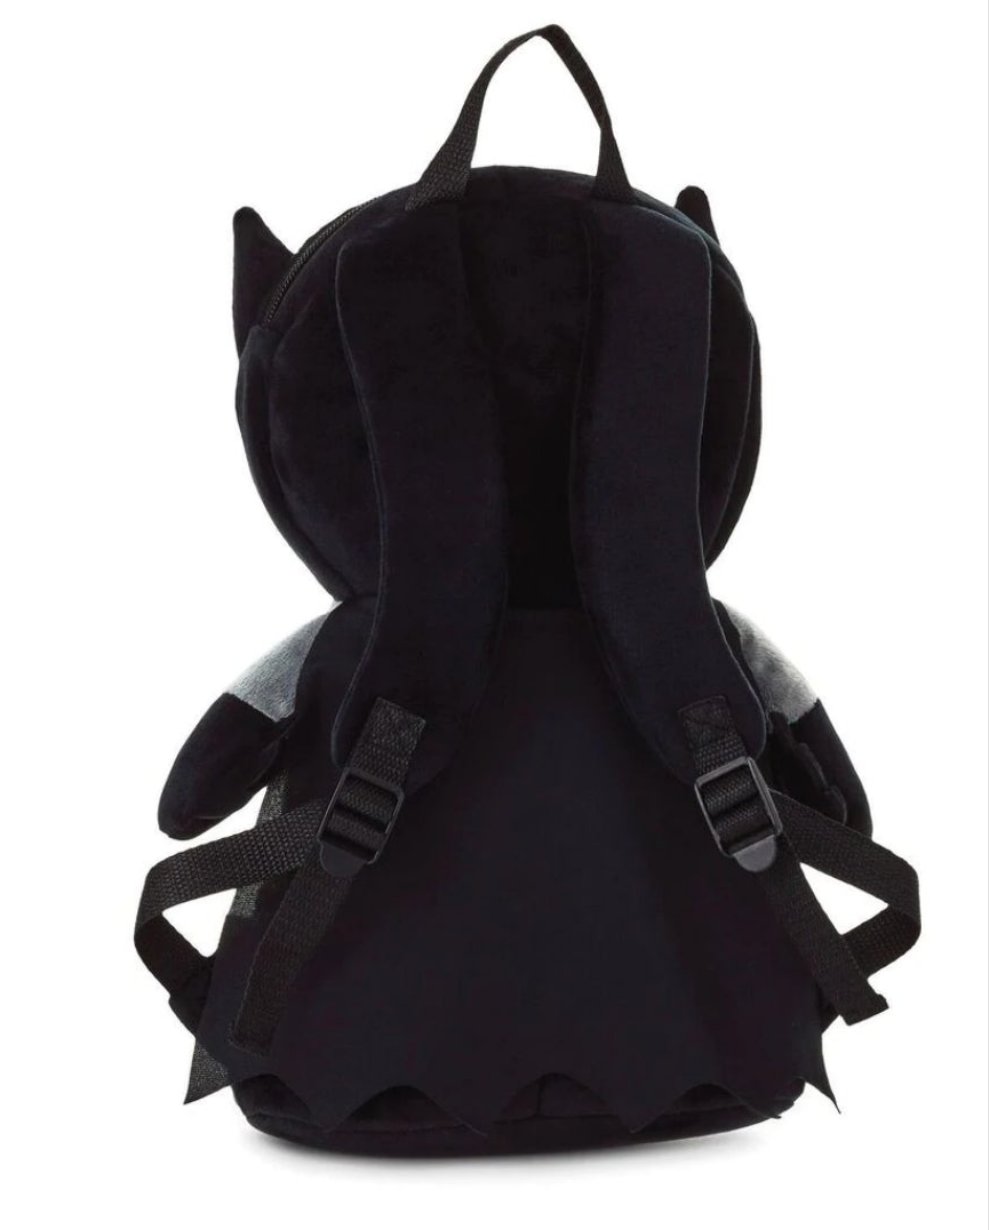 Backpack - Furry Black Cat